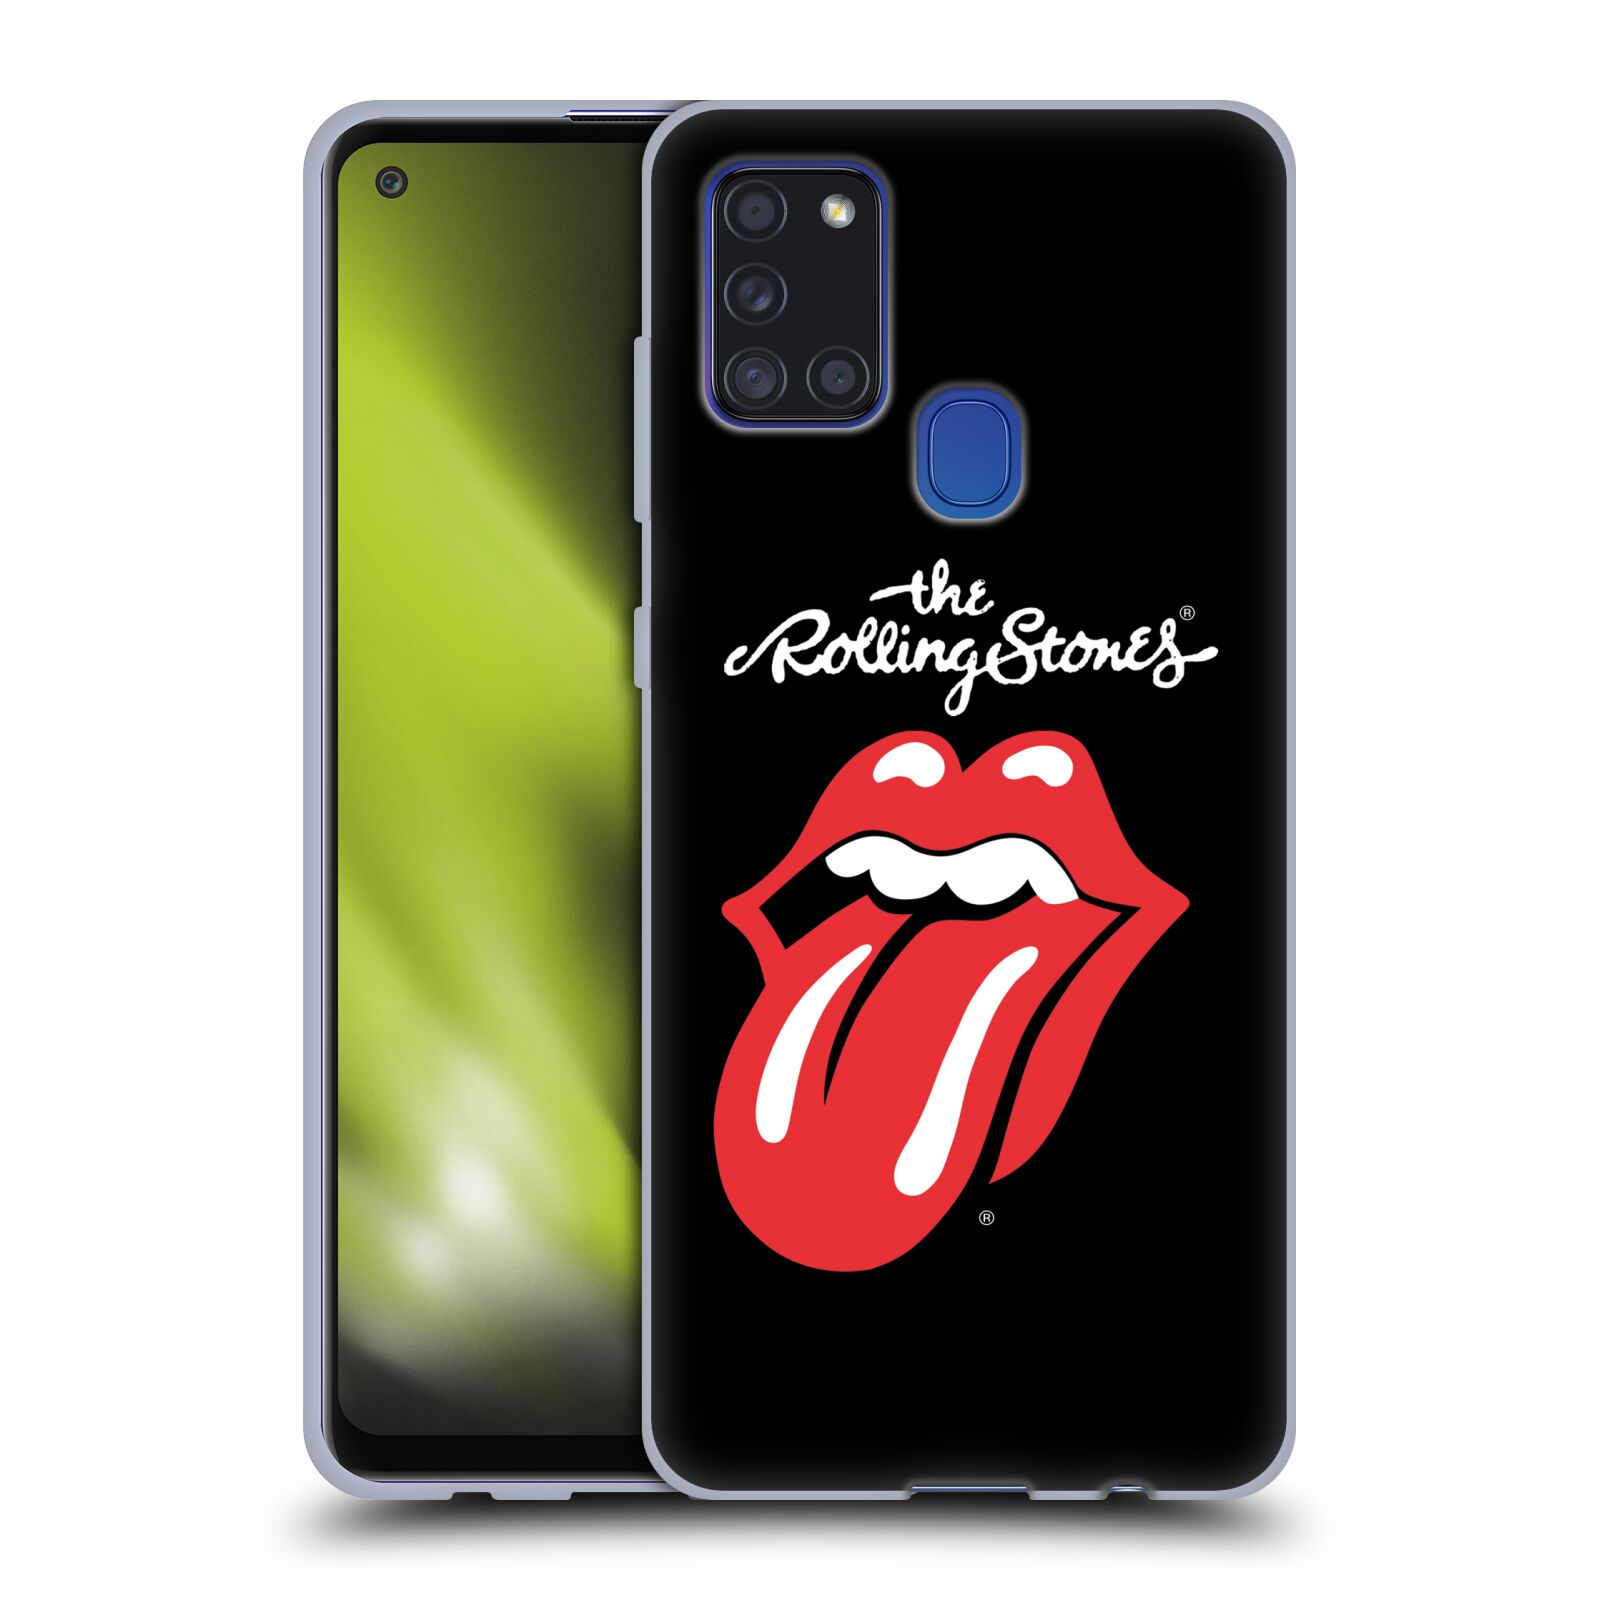 Silikonové pouzdro na mobil Samsung Galaxy A21s - Head Case - The Rolling Stones - Classic Lick (Silikonový kryt, obal, pouzdro na mobilní telefon Samsung Galaxy A21s SM-A217F s motivem The Rolling Stones - Classic Lick)